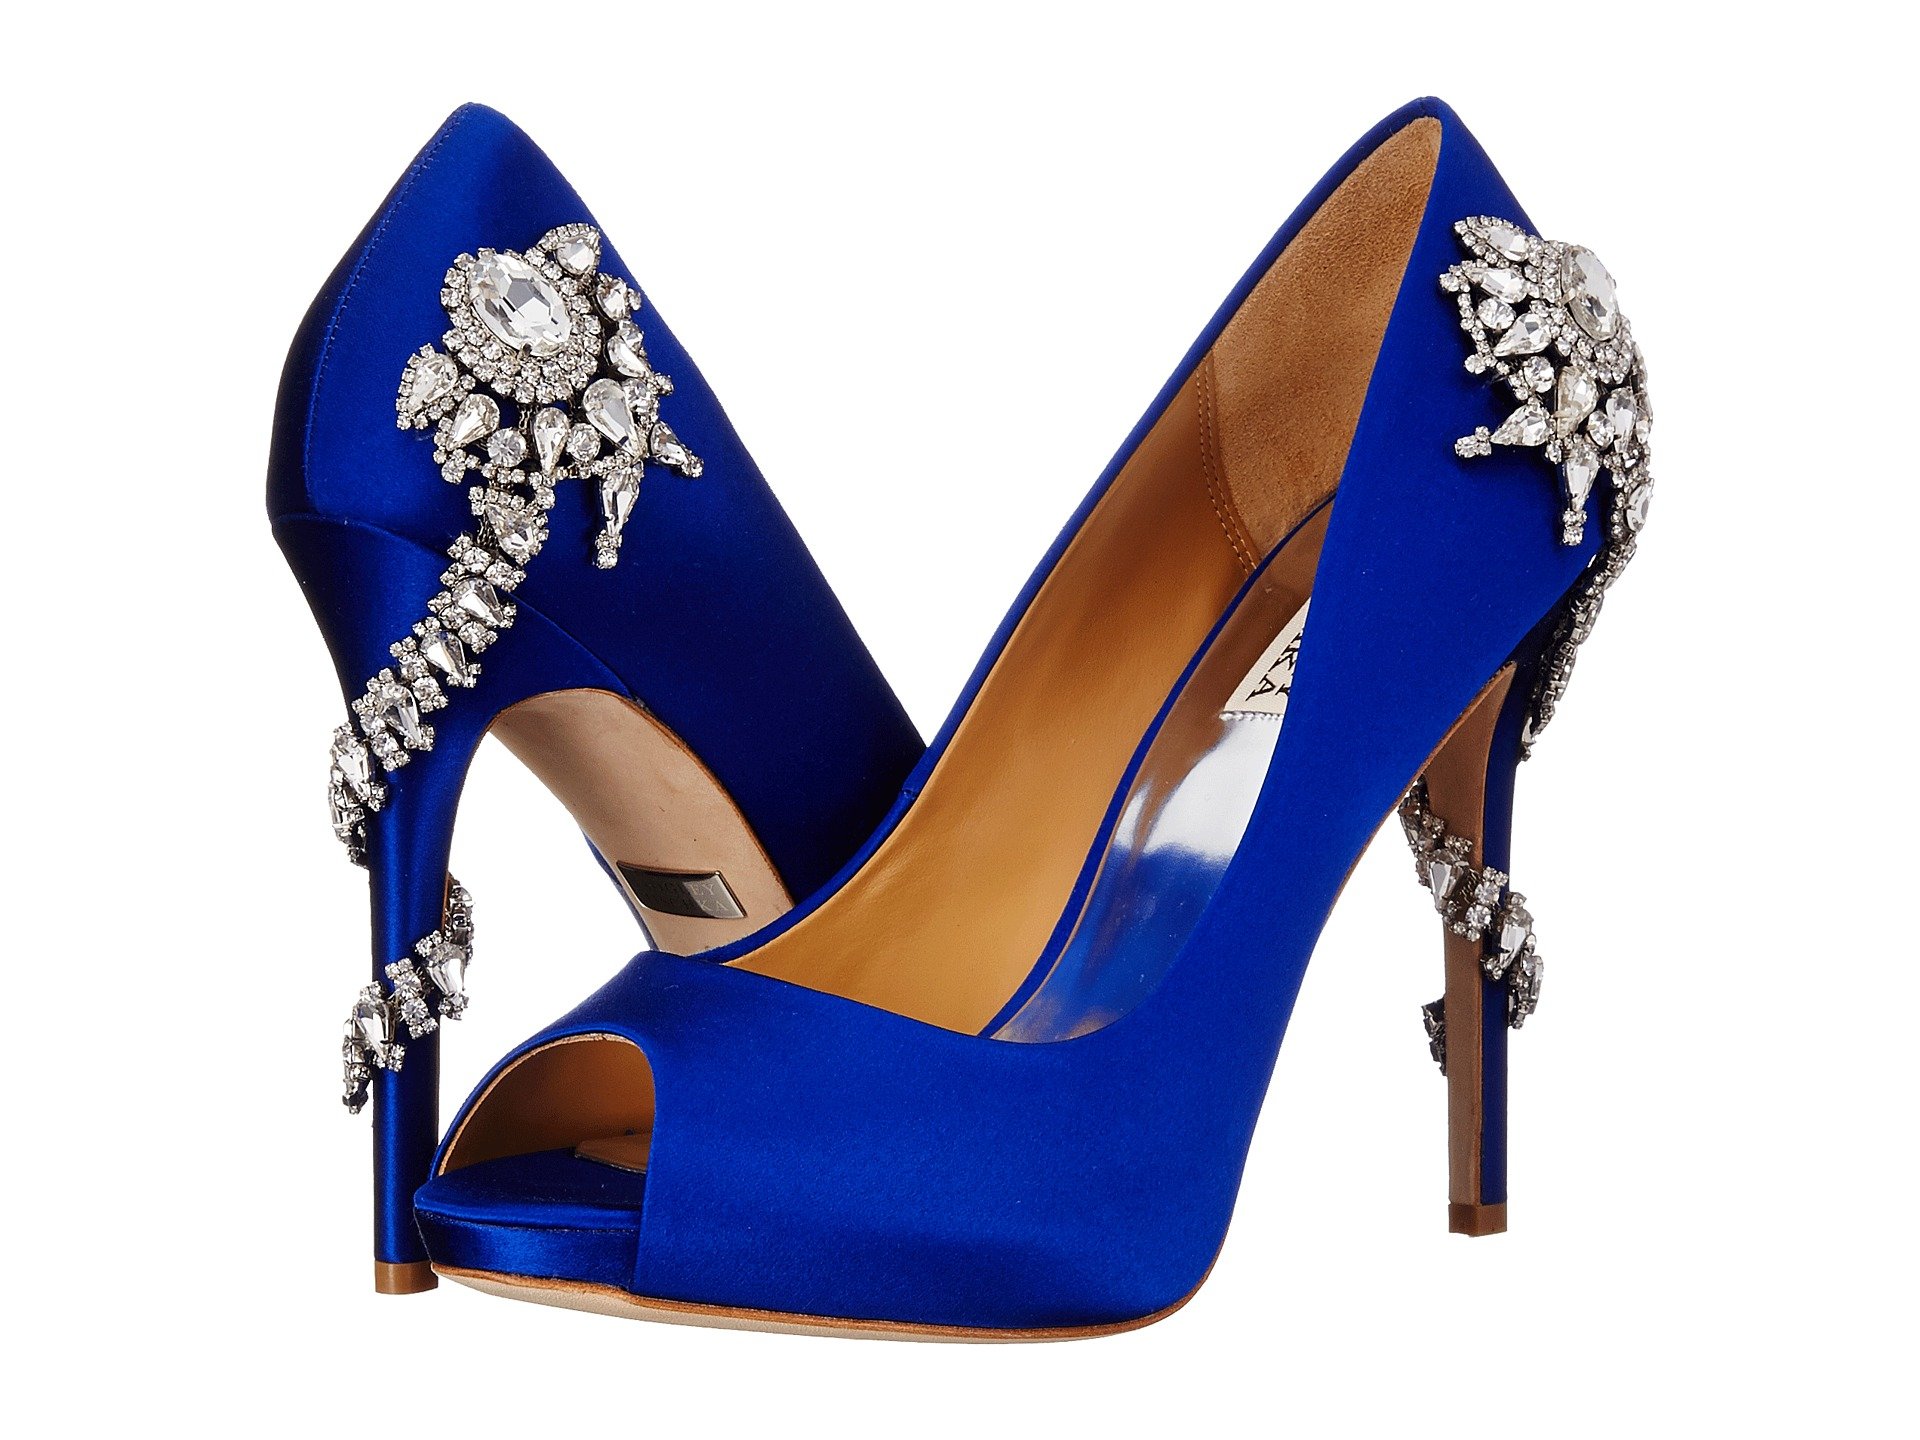 Badgley Mischka Bridal Shoes: Bravado Down the Wedding Aisle